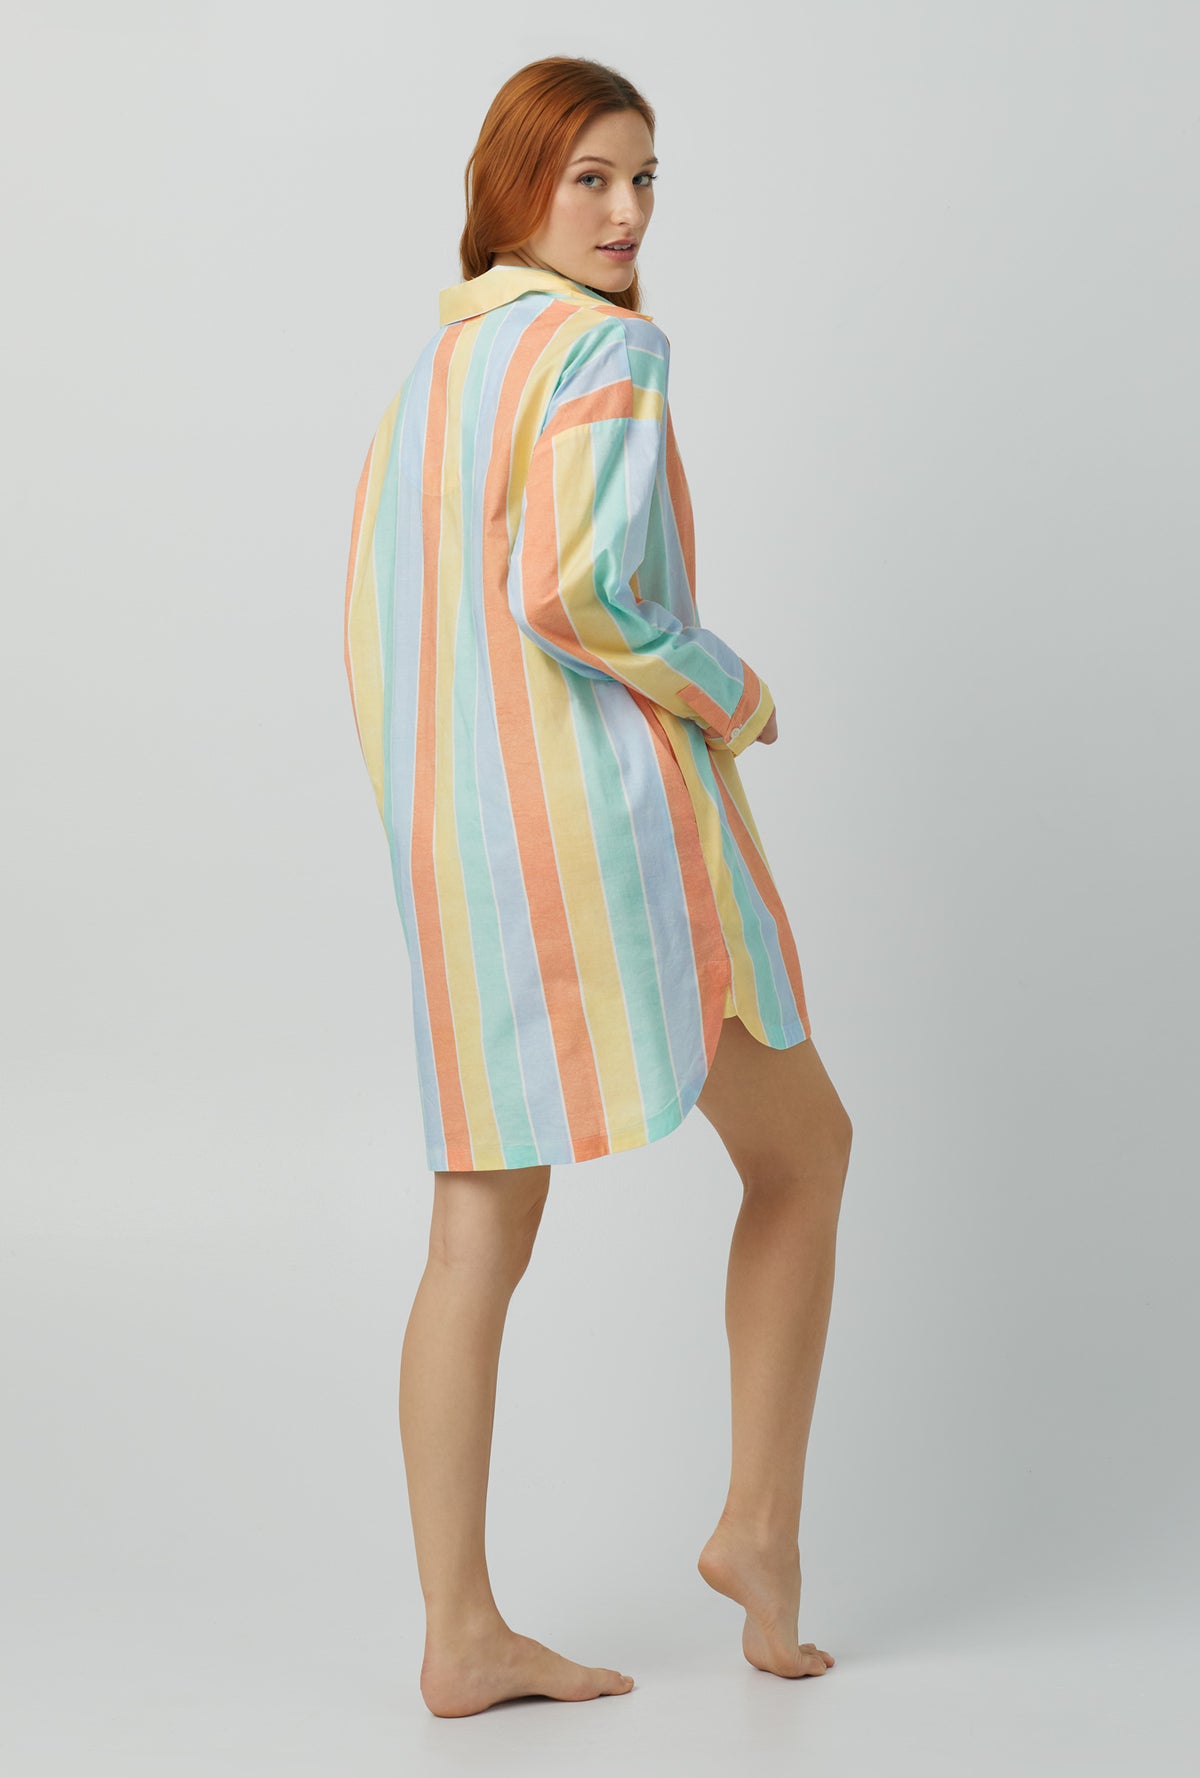 A lady wearing multi color Woven Cotton Poplin Boyfriend Shirt with Sunset Stripe print